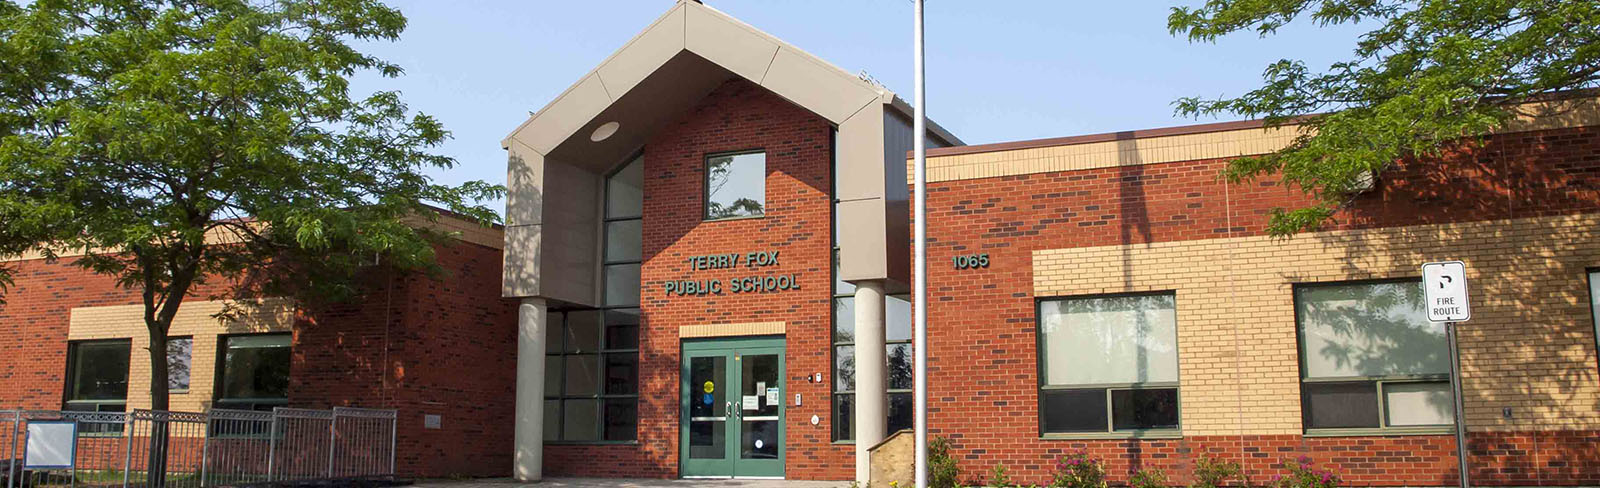 image of Terry Fox Public School